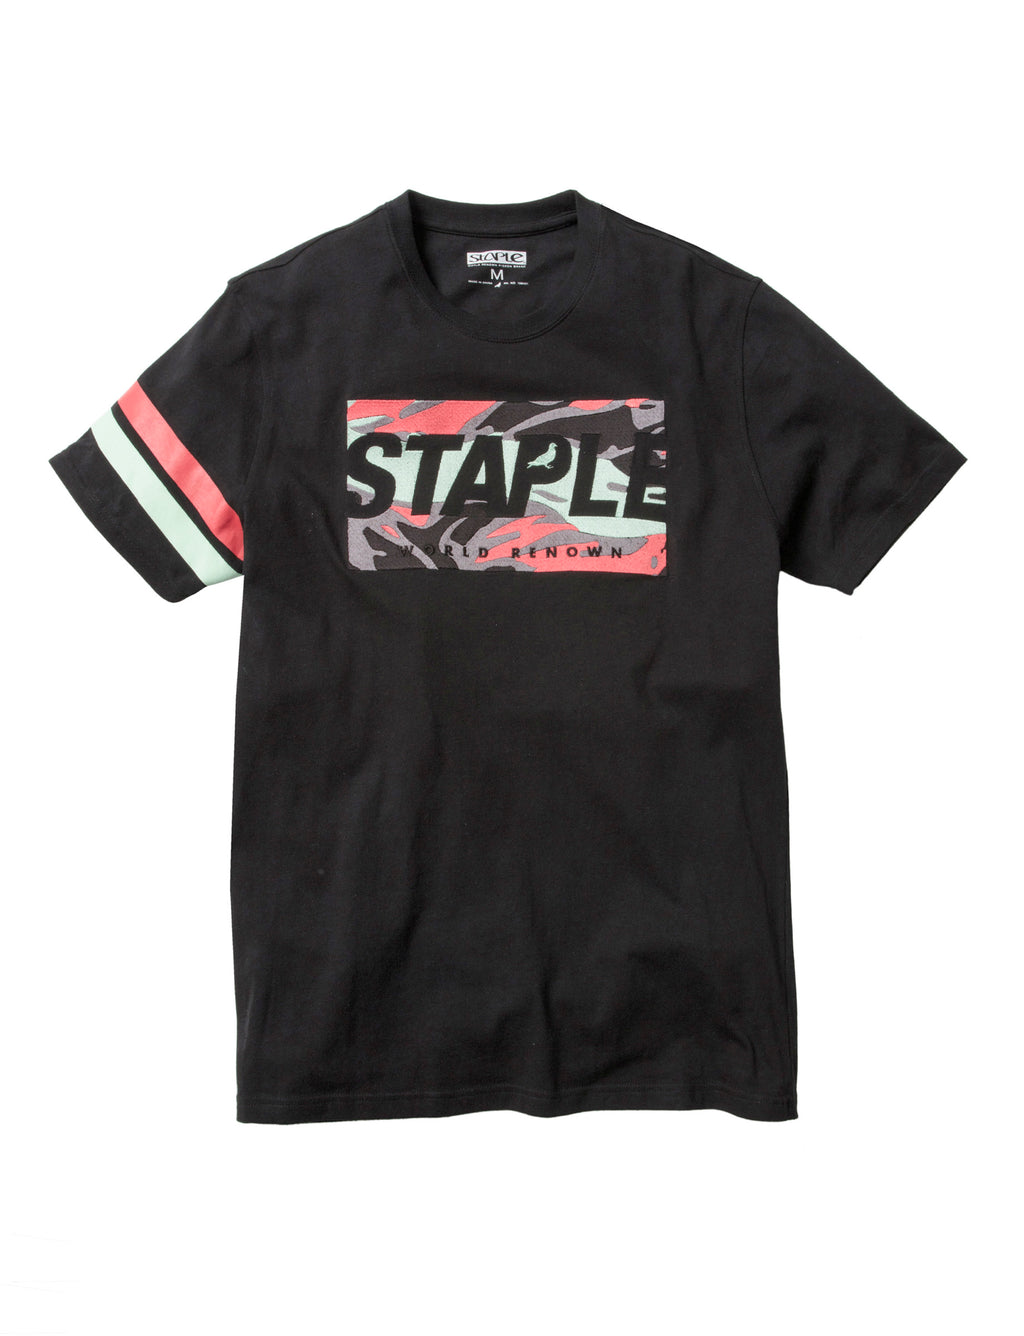 Staple Pigeon - Staple Clothing | Staple Pigeon Clothing | Streetwear